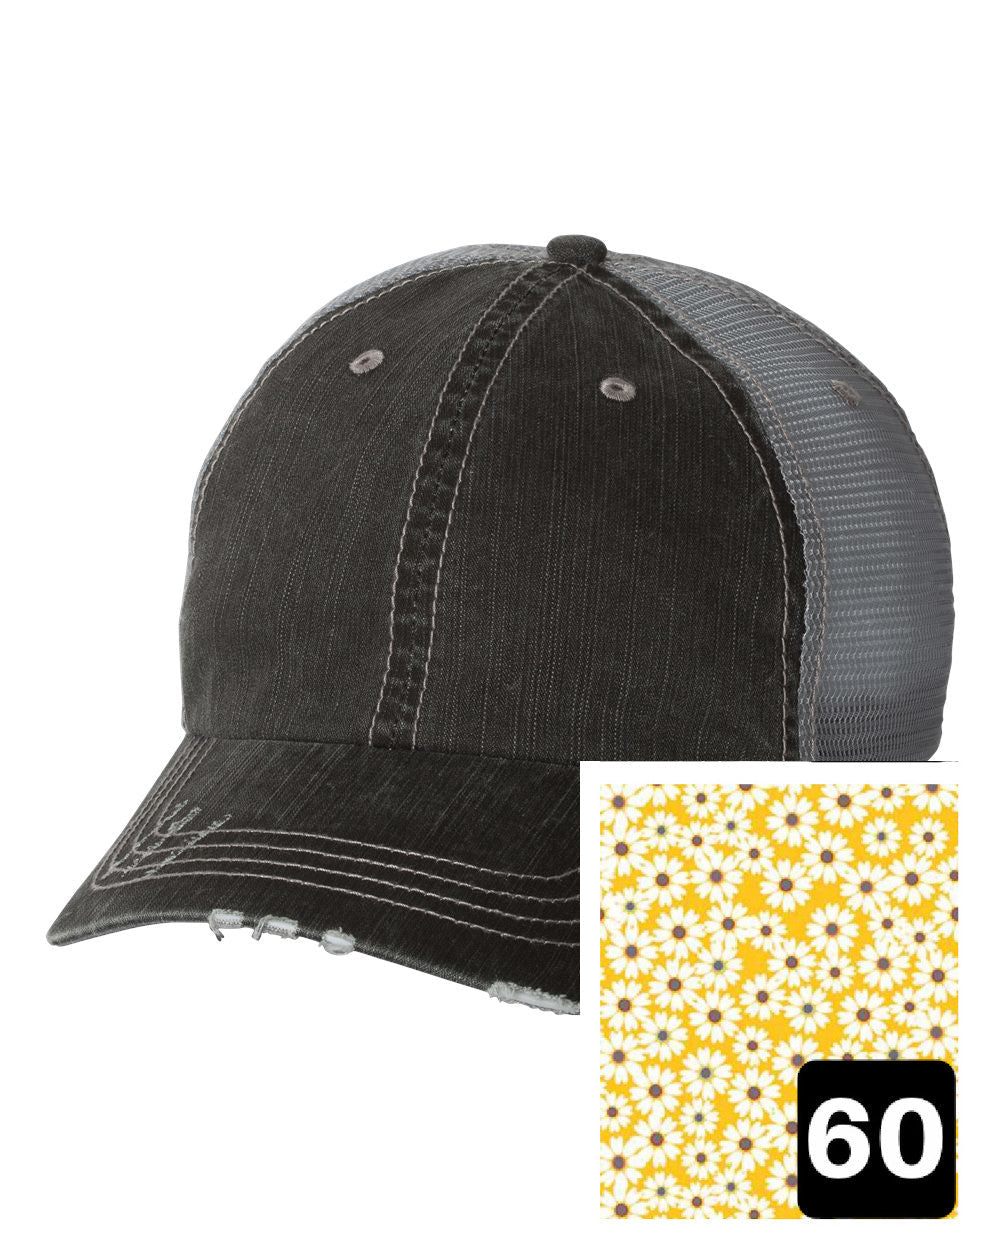 Ohio Hat | Gray Distressed Trucker Cap | Many Fabric Choices